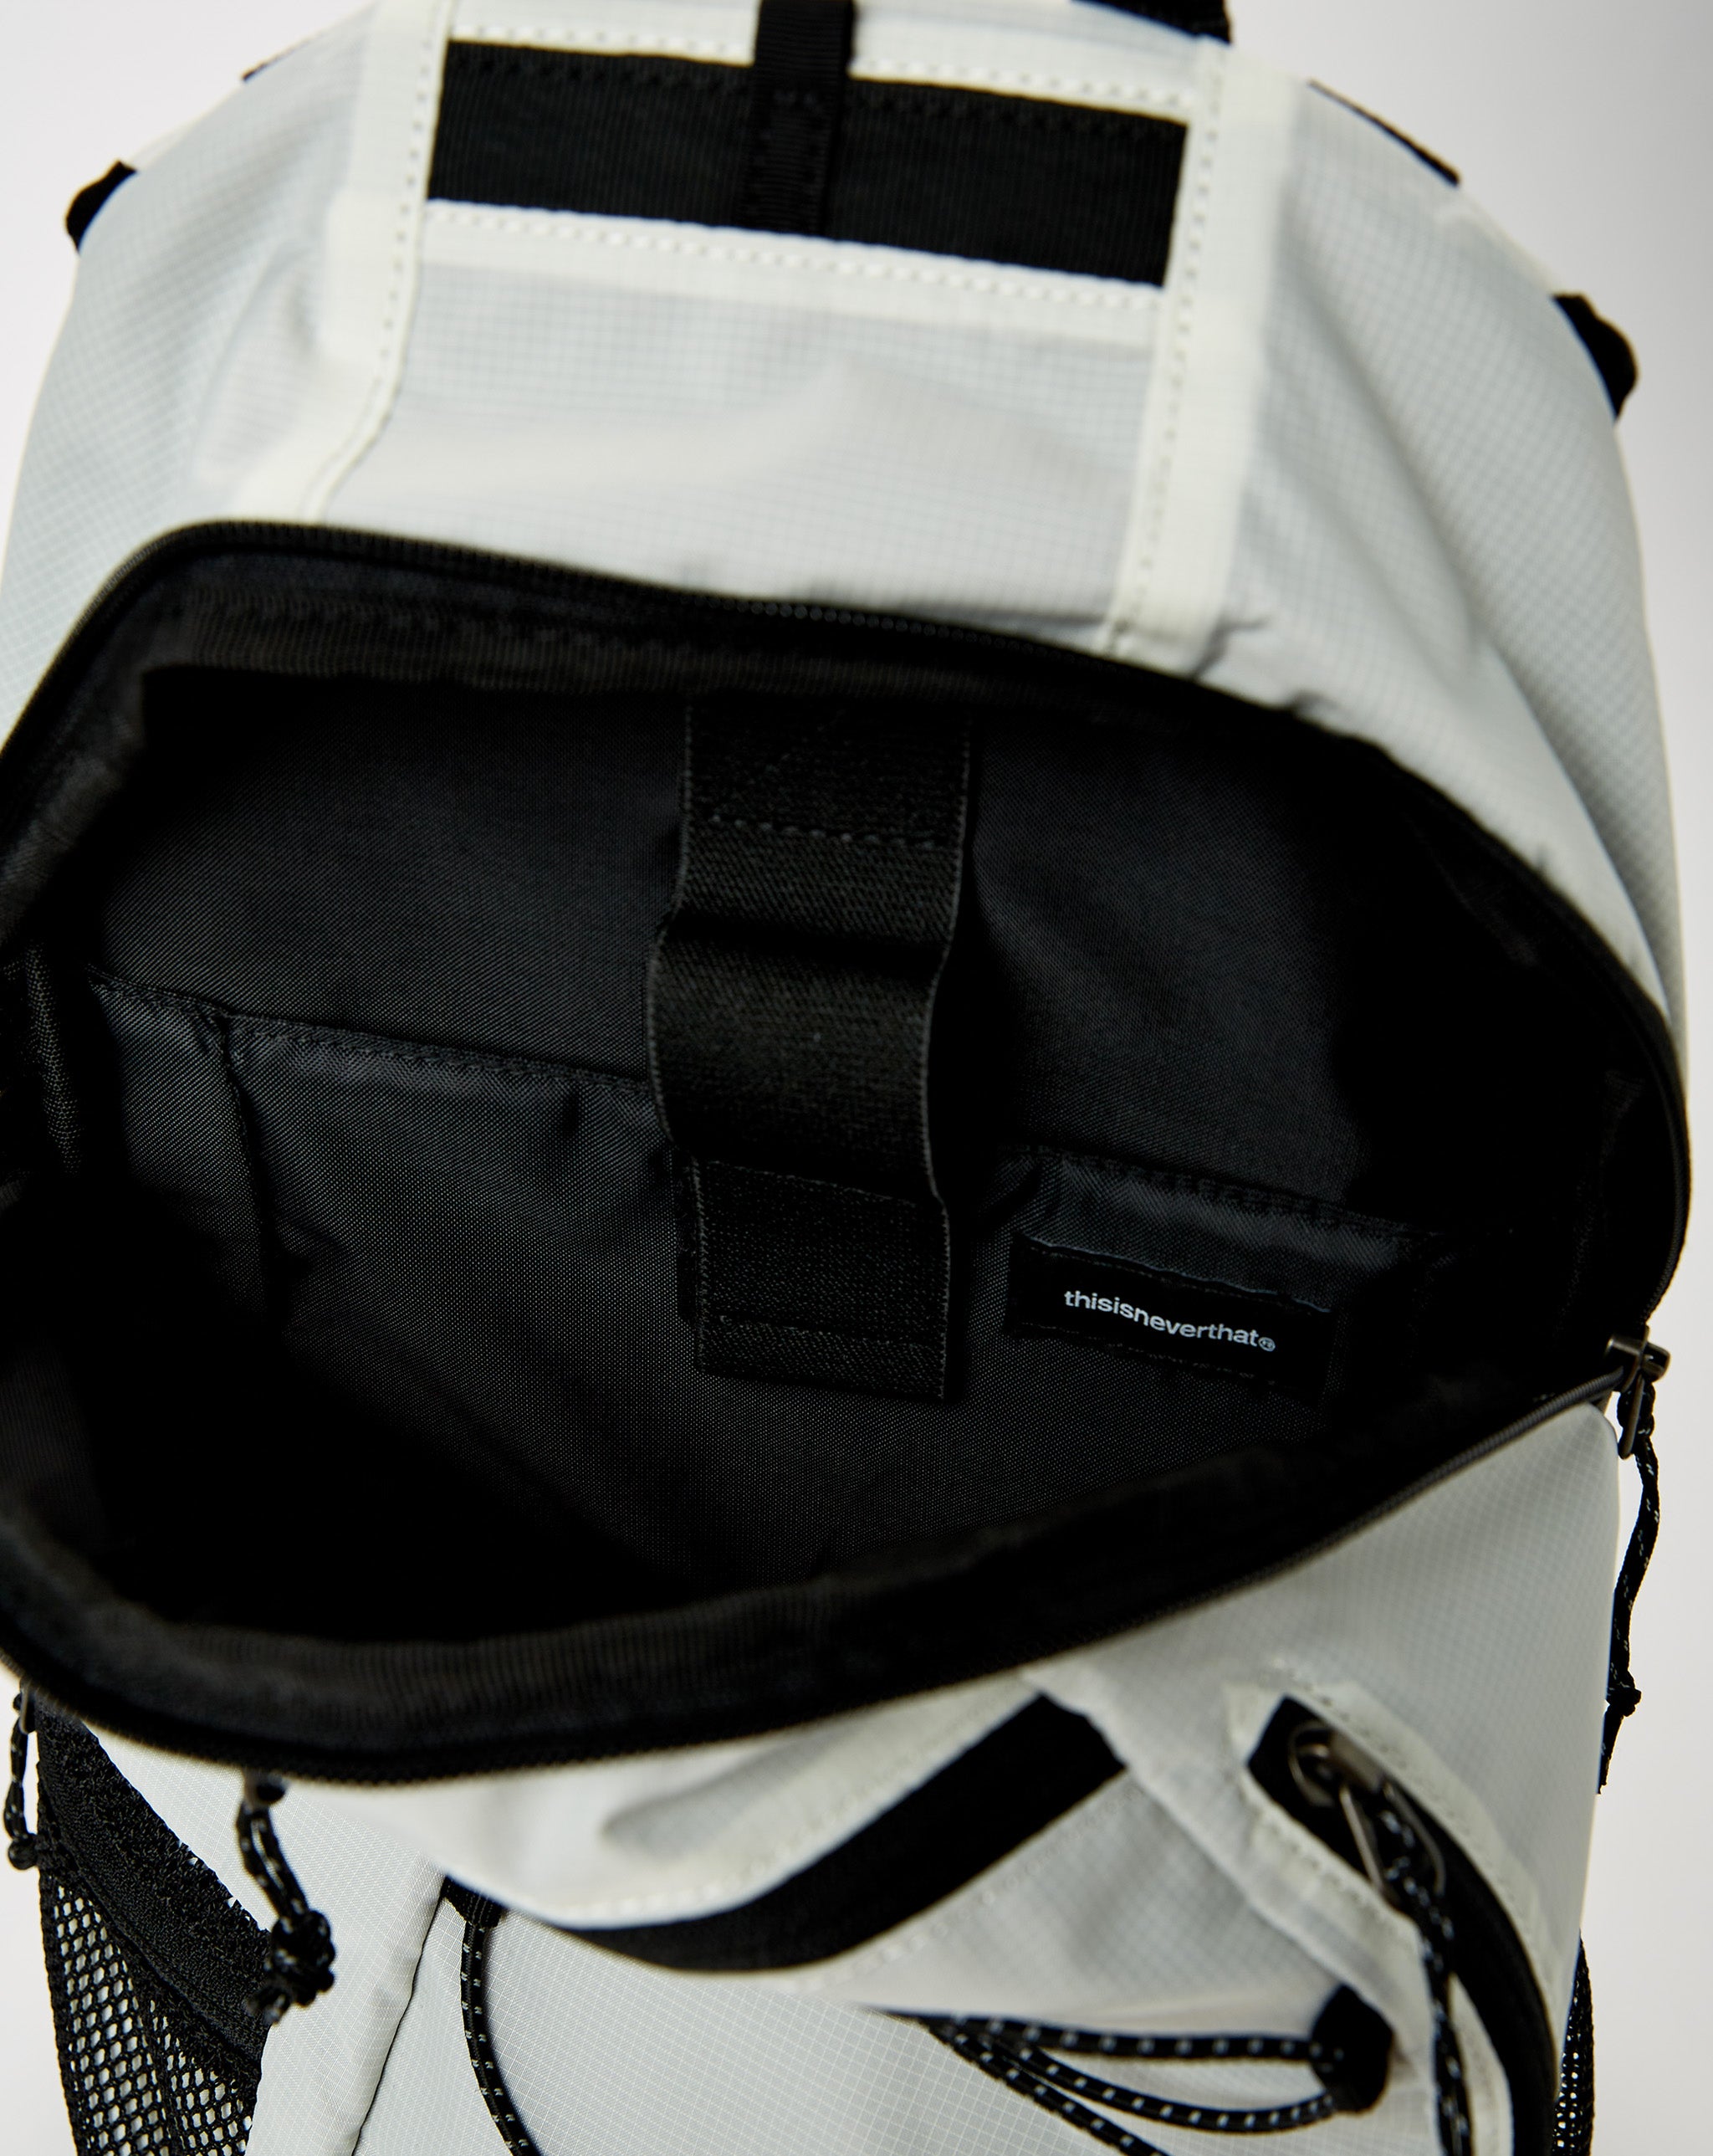 thisisneverthat Traveler FT 15 Backpack  - XHIBITION